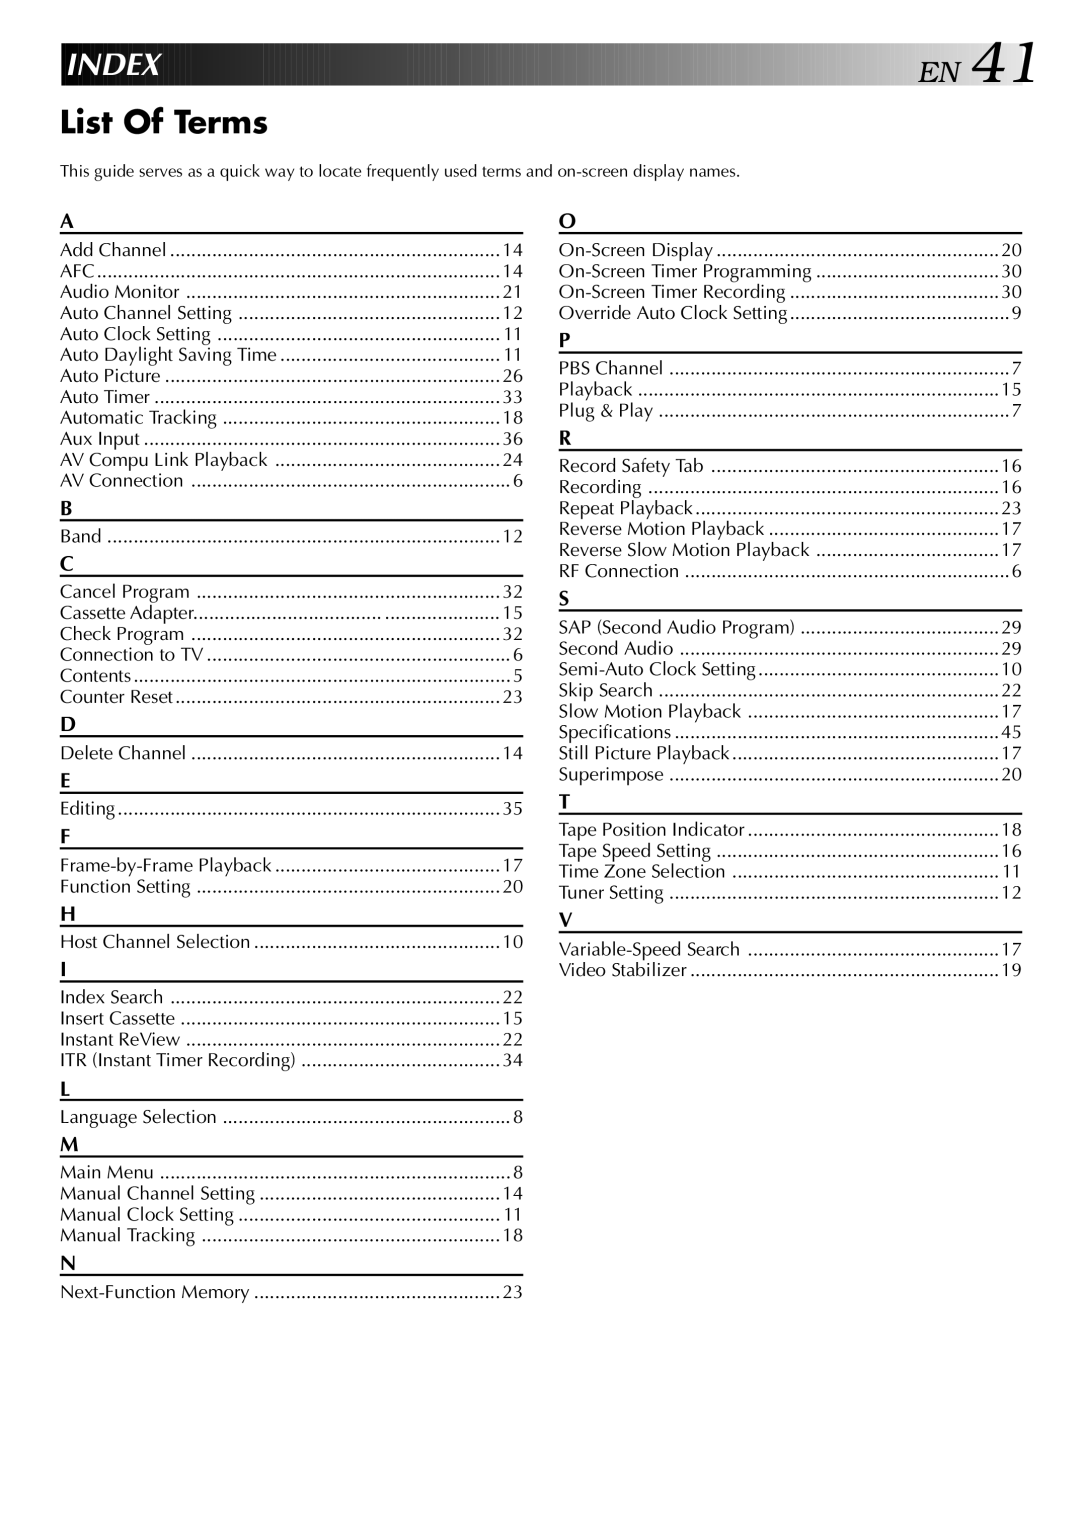 JVC HR-J642U manual Index, List Of Terms 